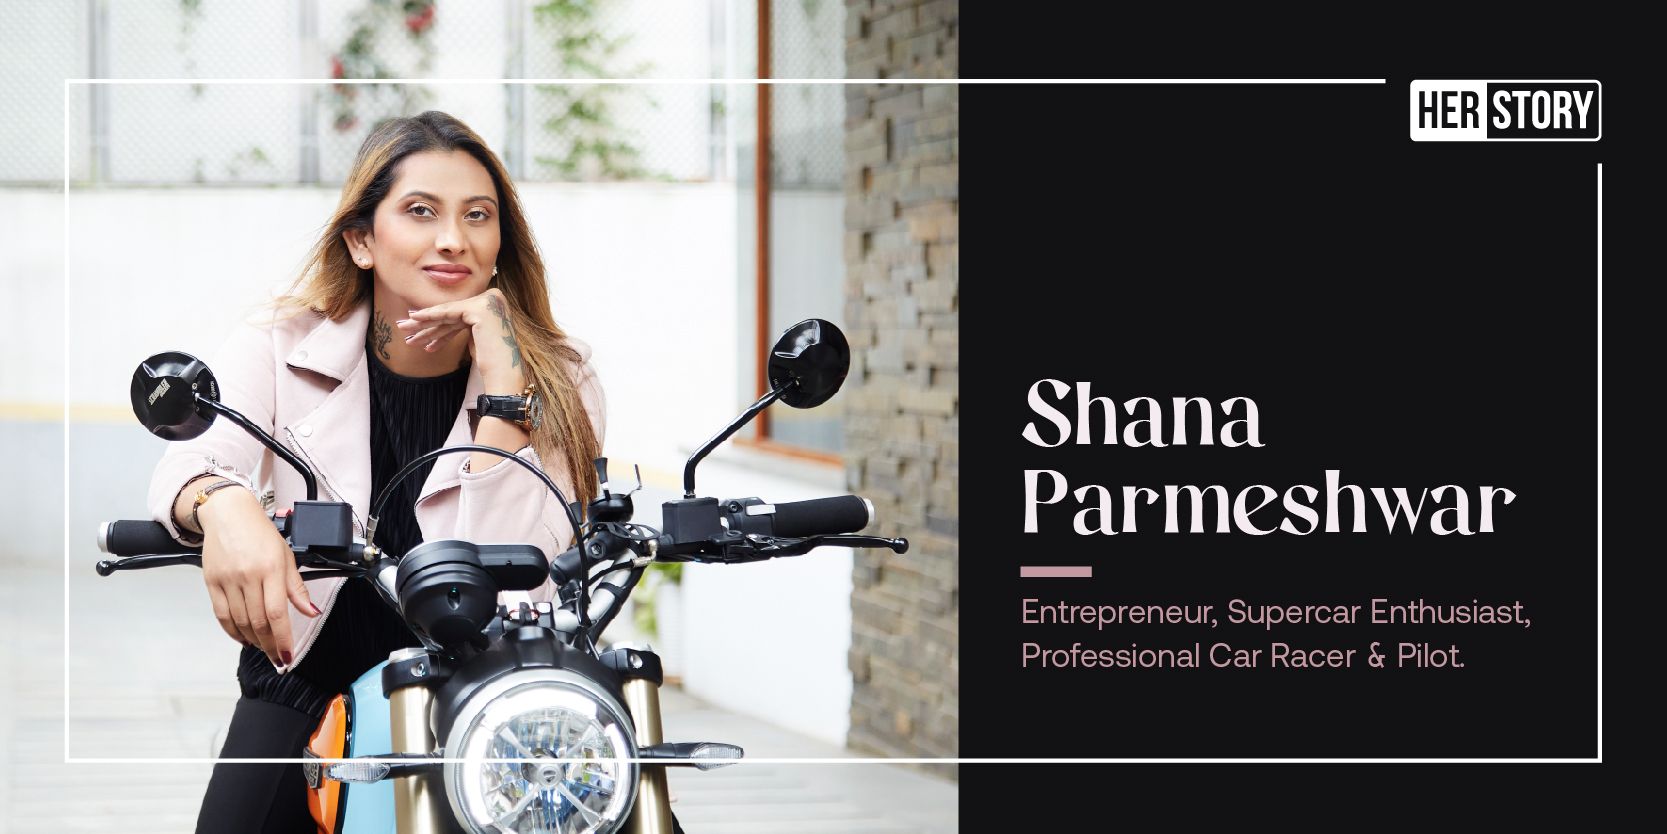 Aviator, motorcar racer, entrepreneur: Meet Shana Parmeshwar, who is launching India’s longest racetrack in Andhra Pradesh